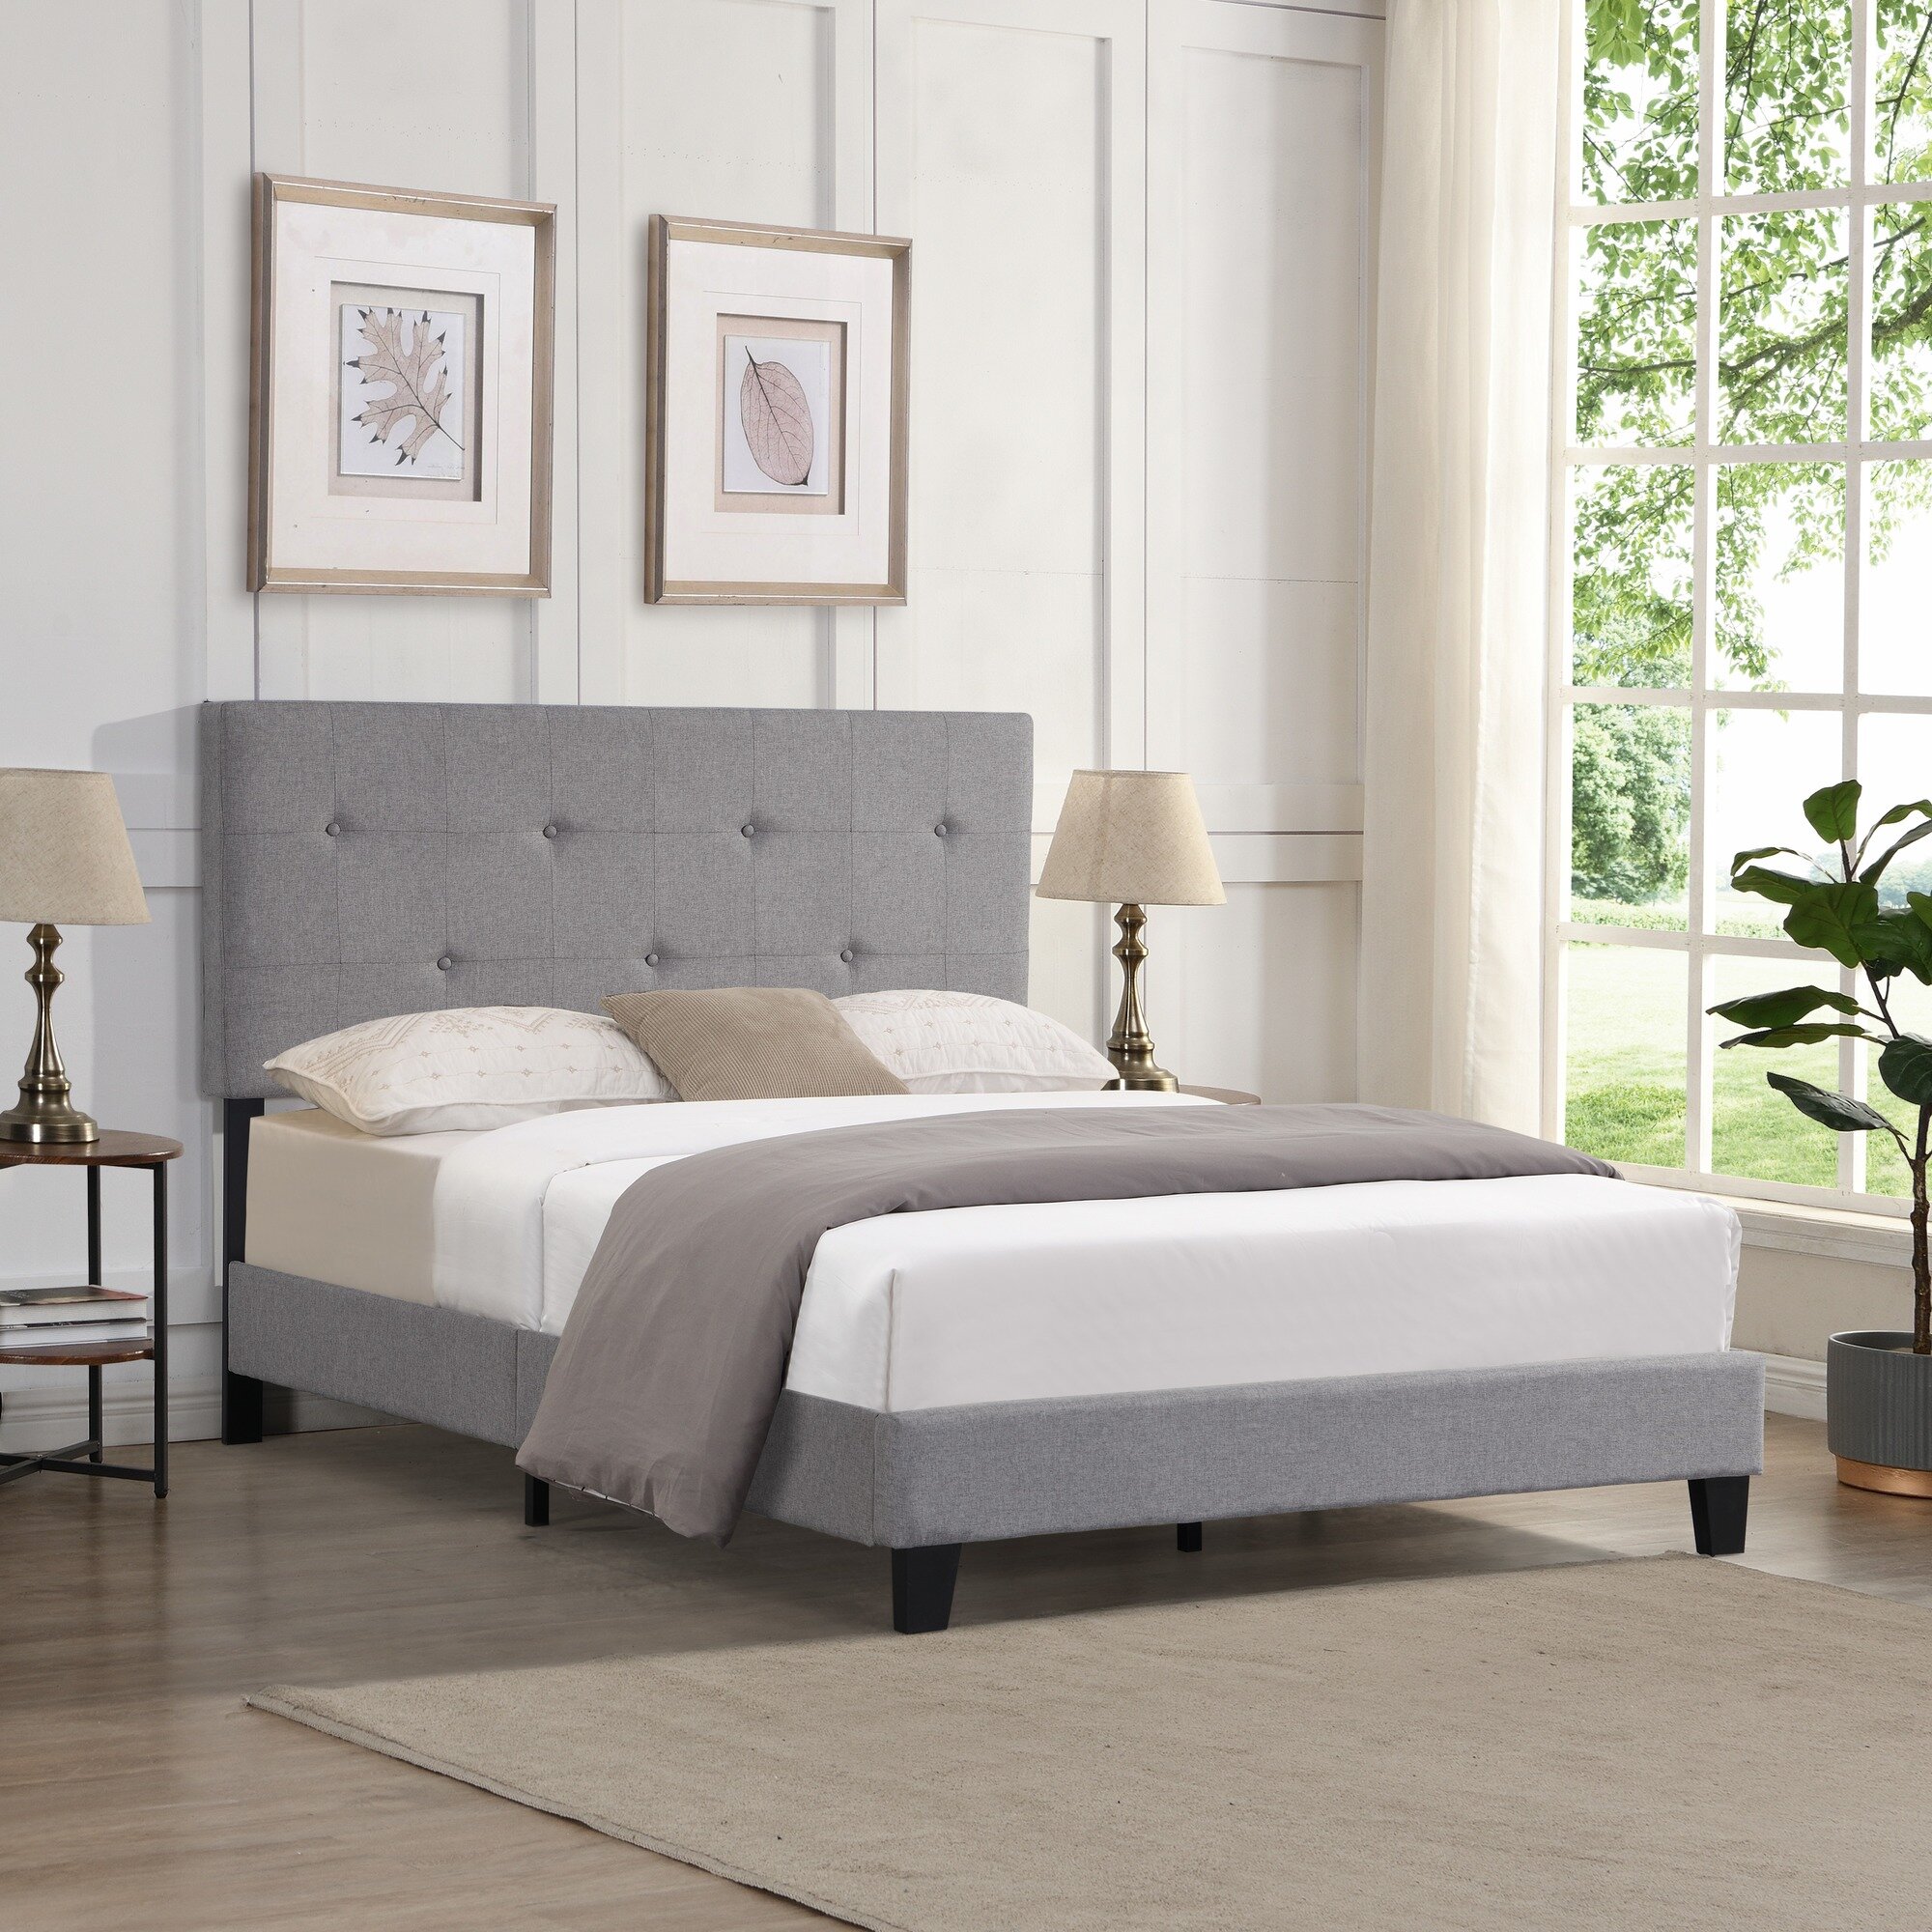 Details about   Solid Wood Platform Bed Headboard Design Twin Size Bed Frame Wood Slat Support 